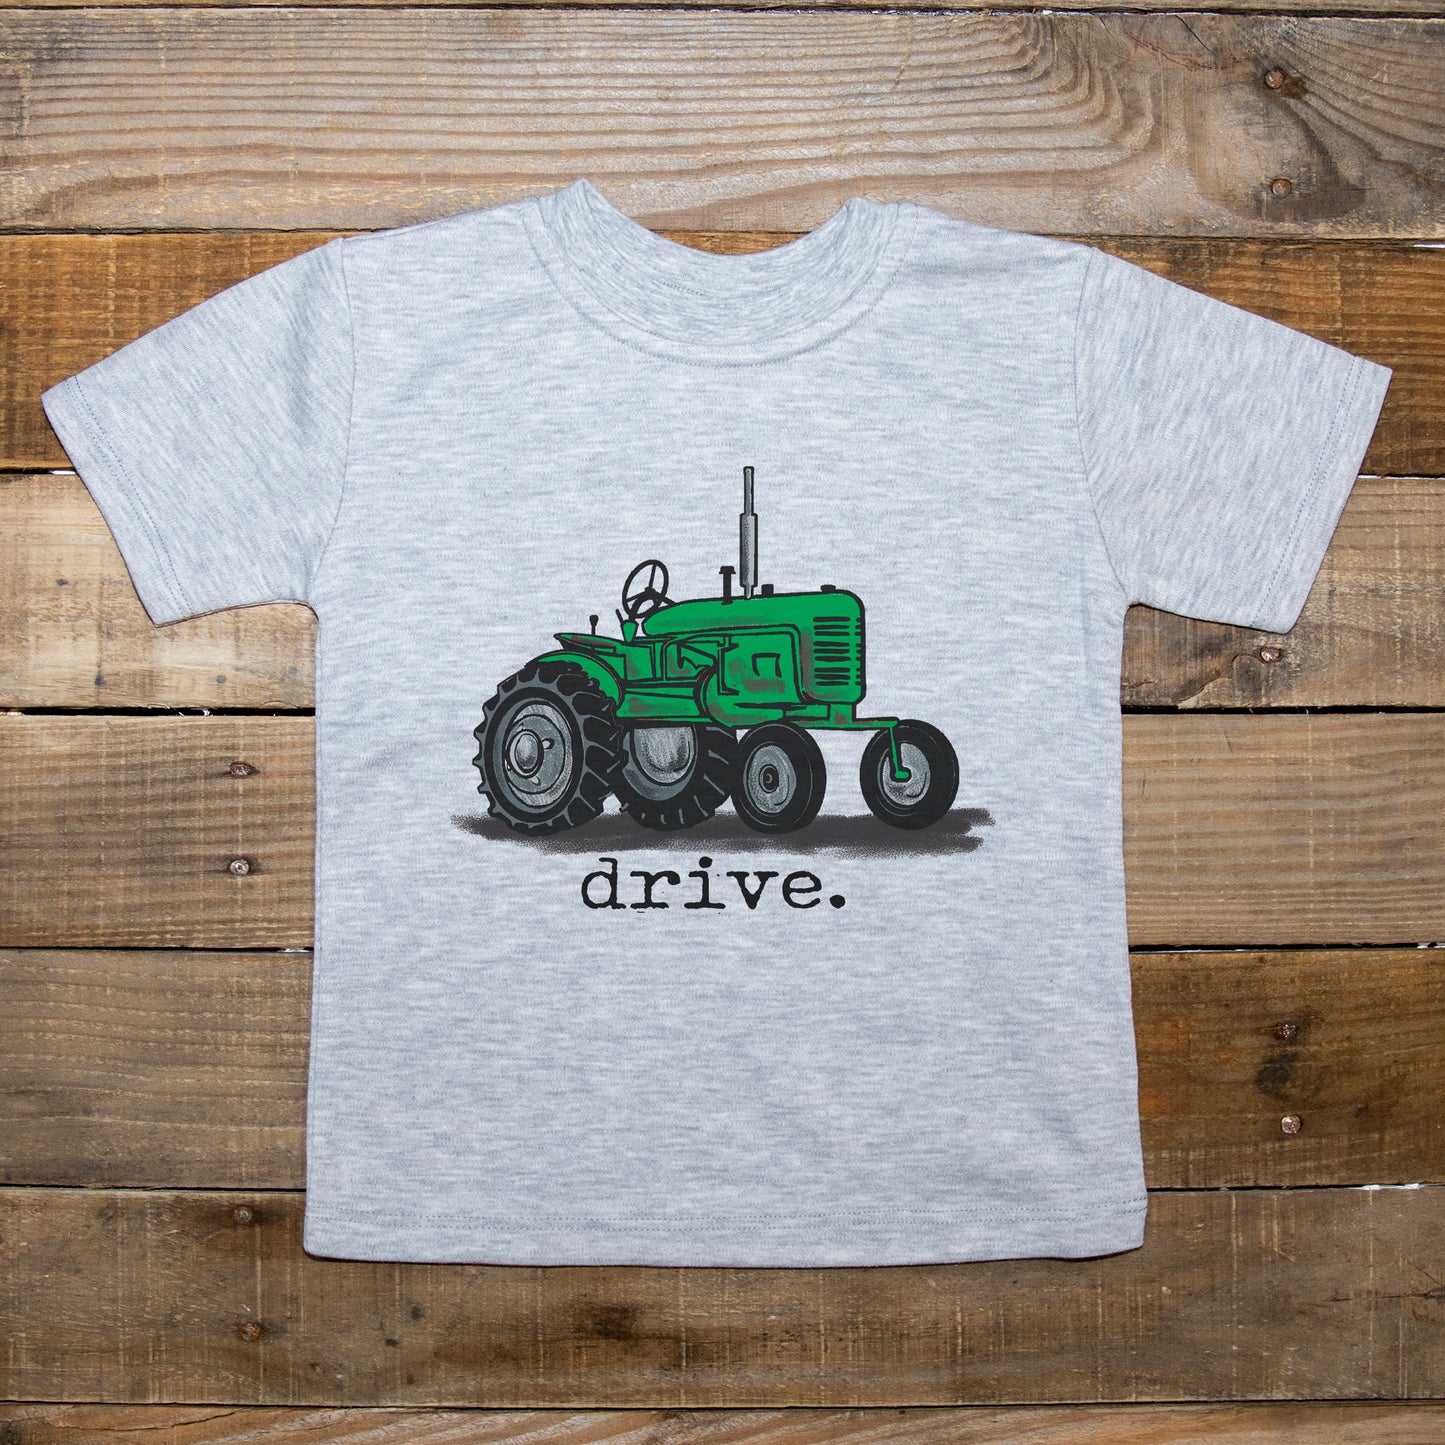 "Drive" Green Tractor Tee in Grey